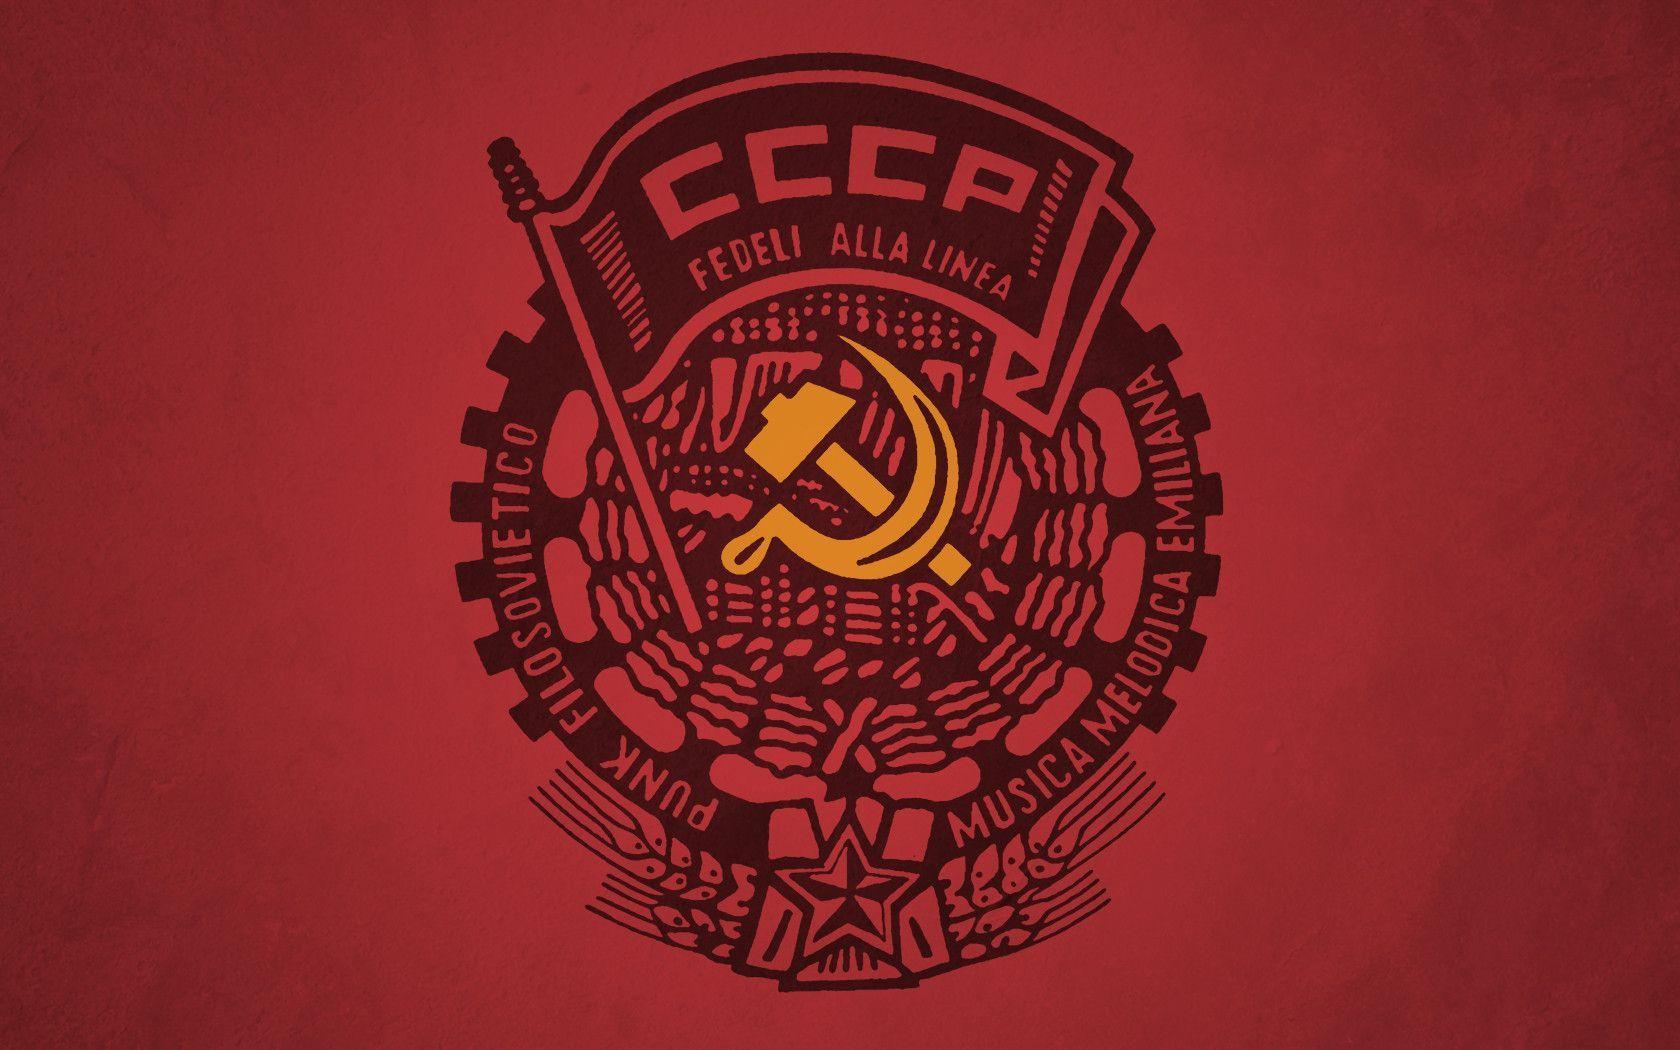 Soviet Union Wallpaper 70 images